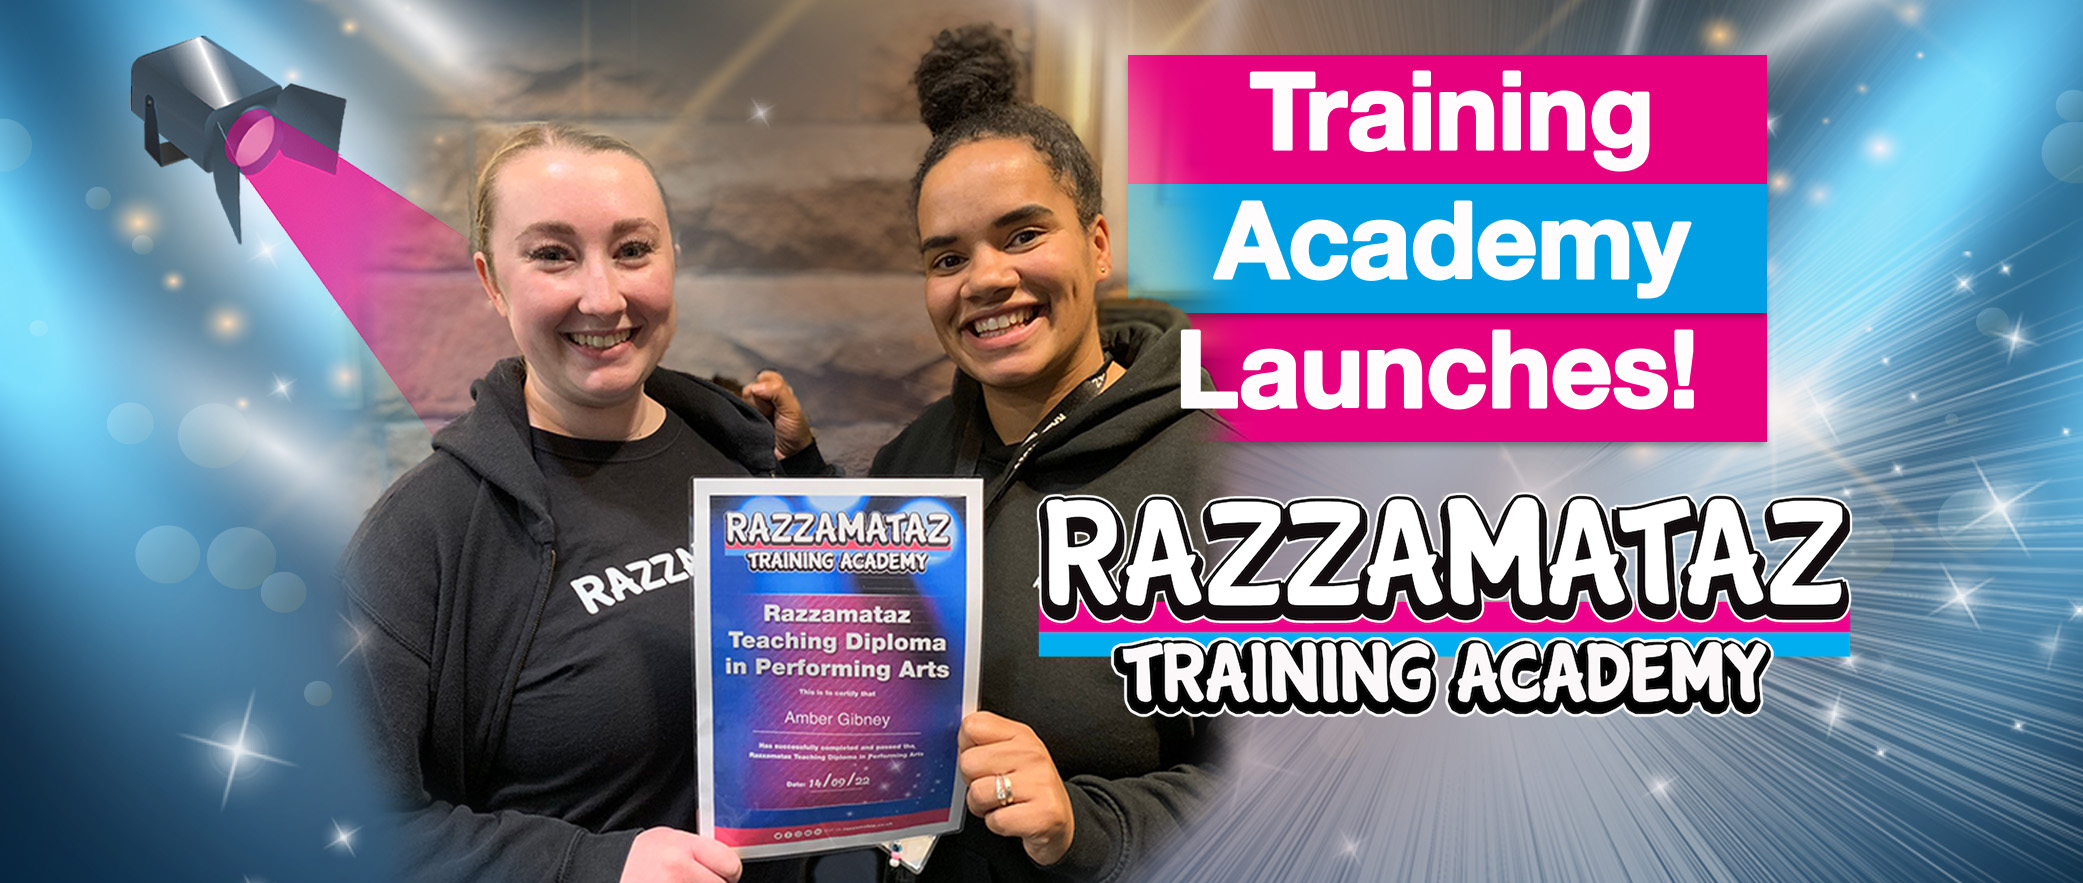 Razzamataz Training Academy Launches!